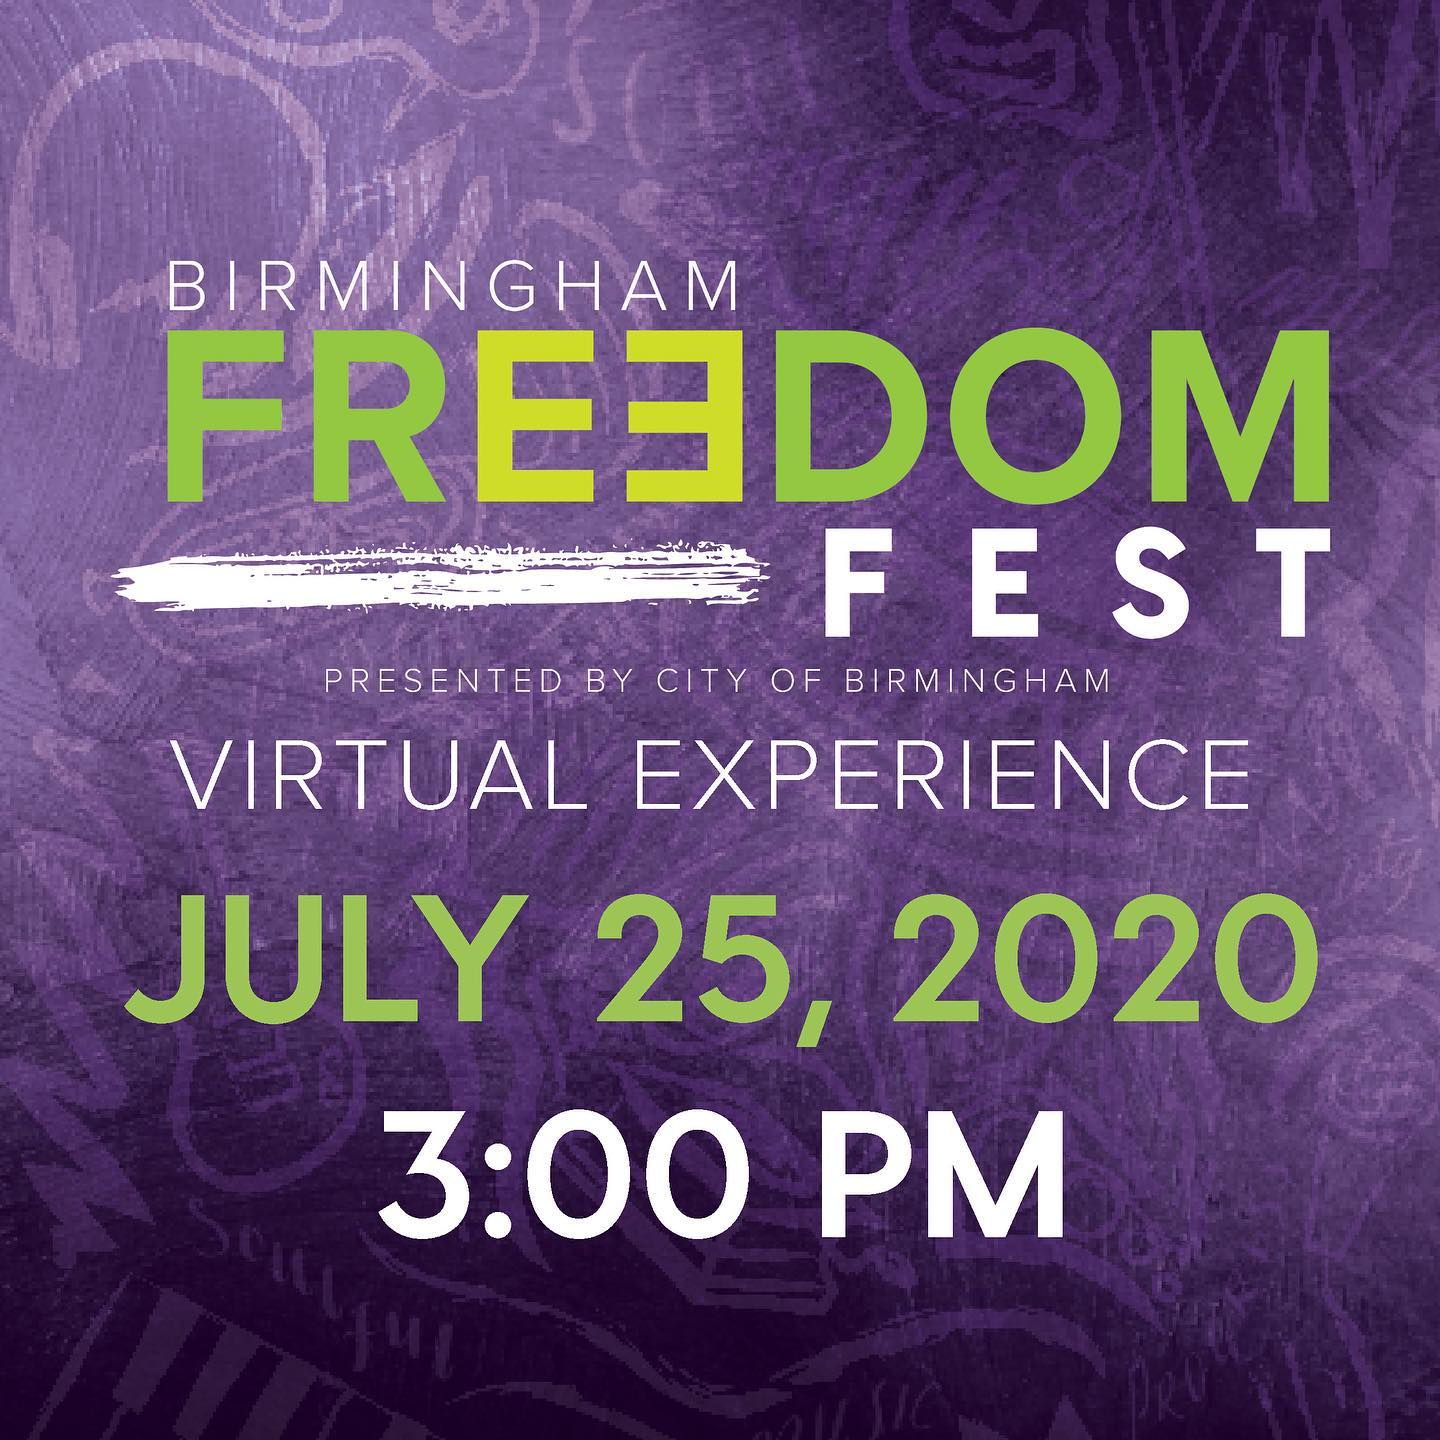 freedom fest 2020 signage Guide to Birmingham Freedom Fest 2020 happening virtually July 25